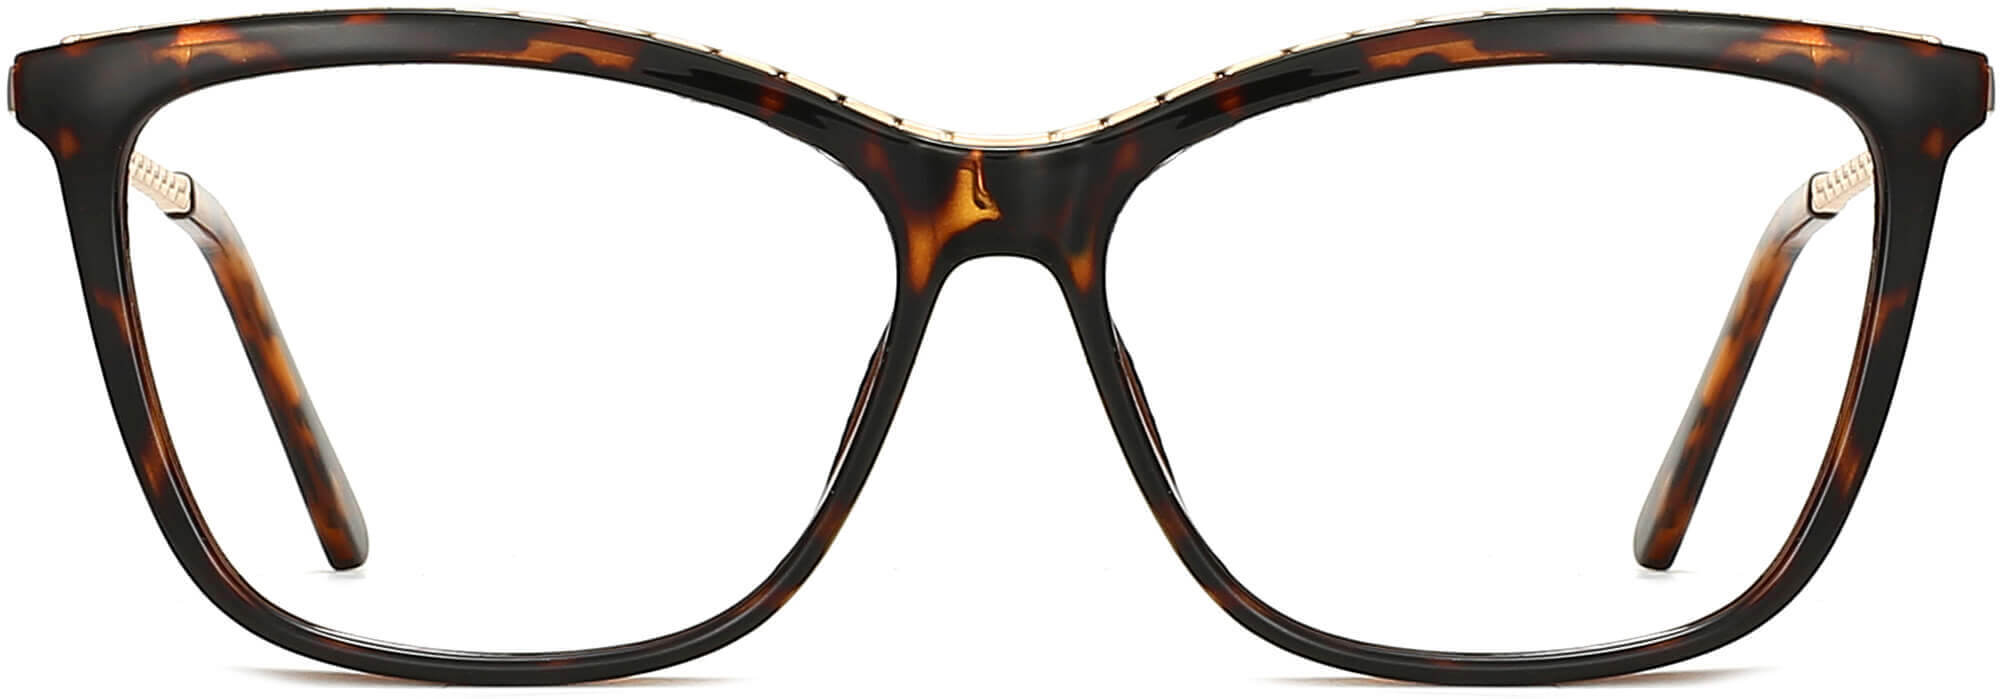 Carol Cateye Tortoise Eyeglasses from ANRRI, front view